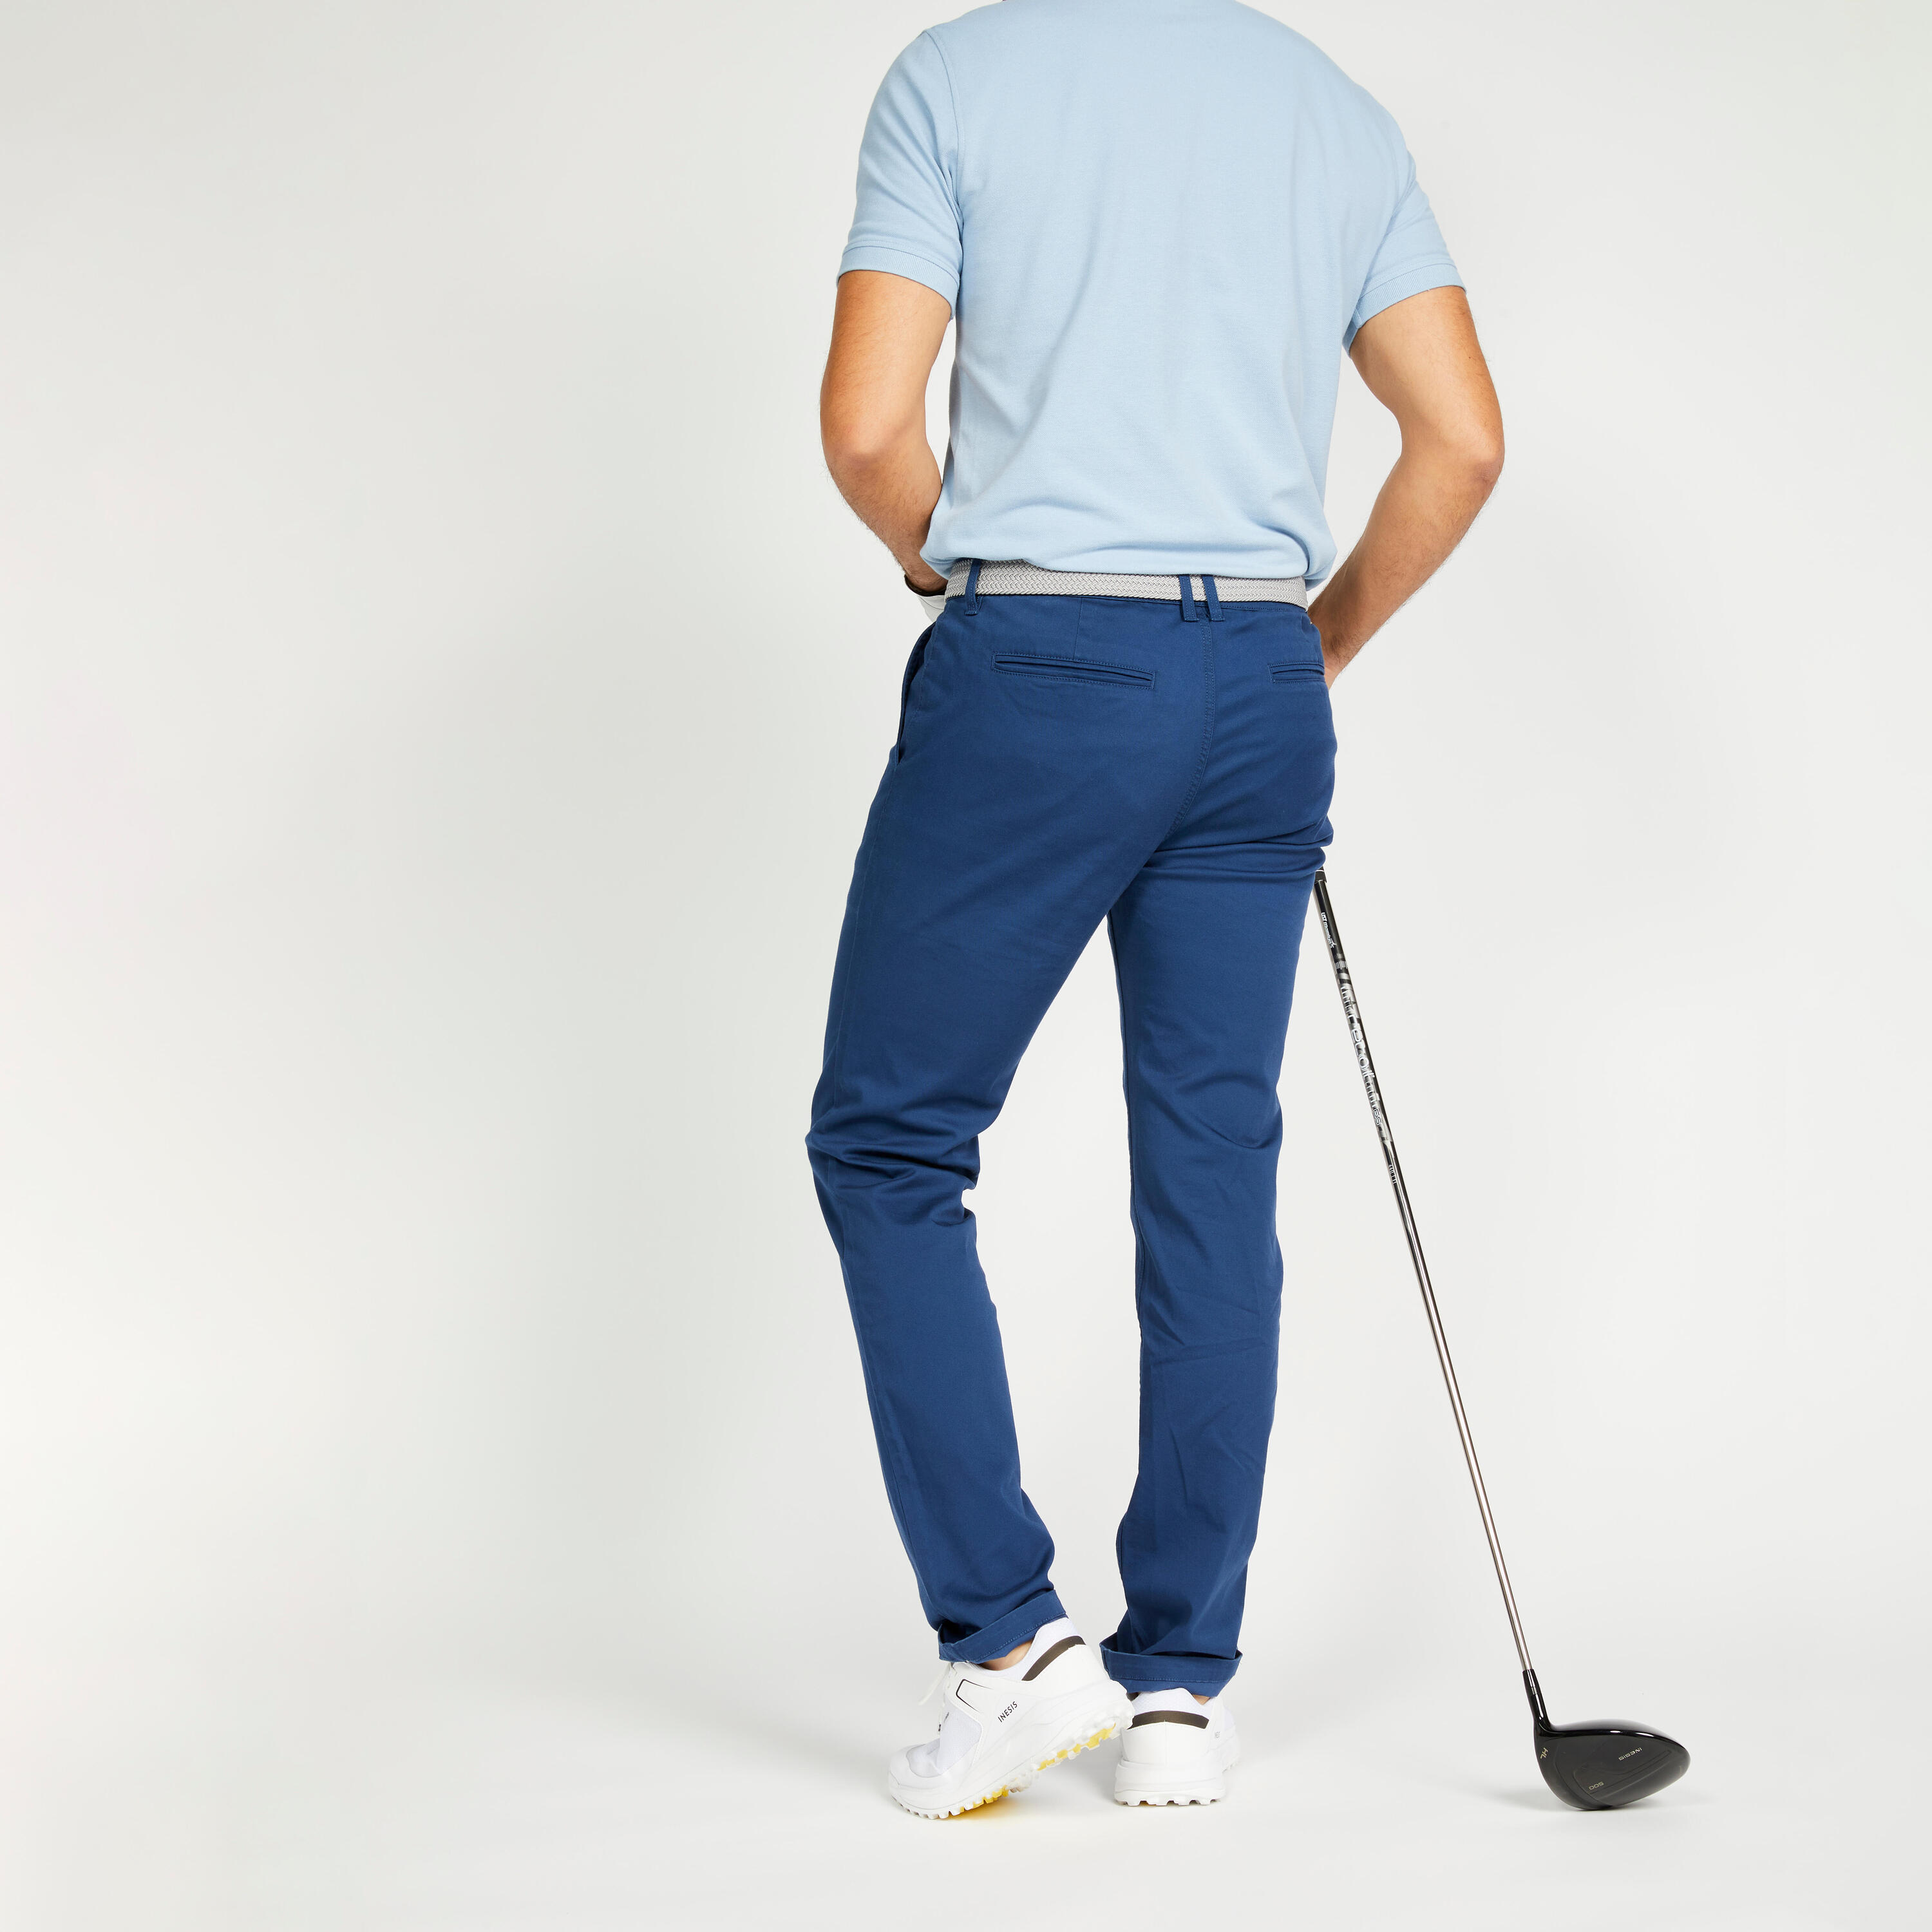 Men's golf trousers - MW500 blue 2/4